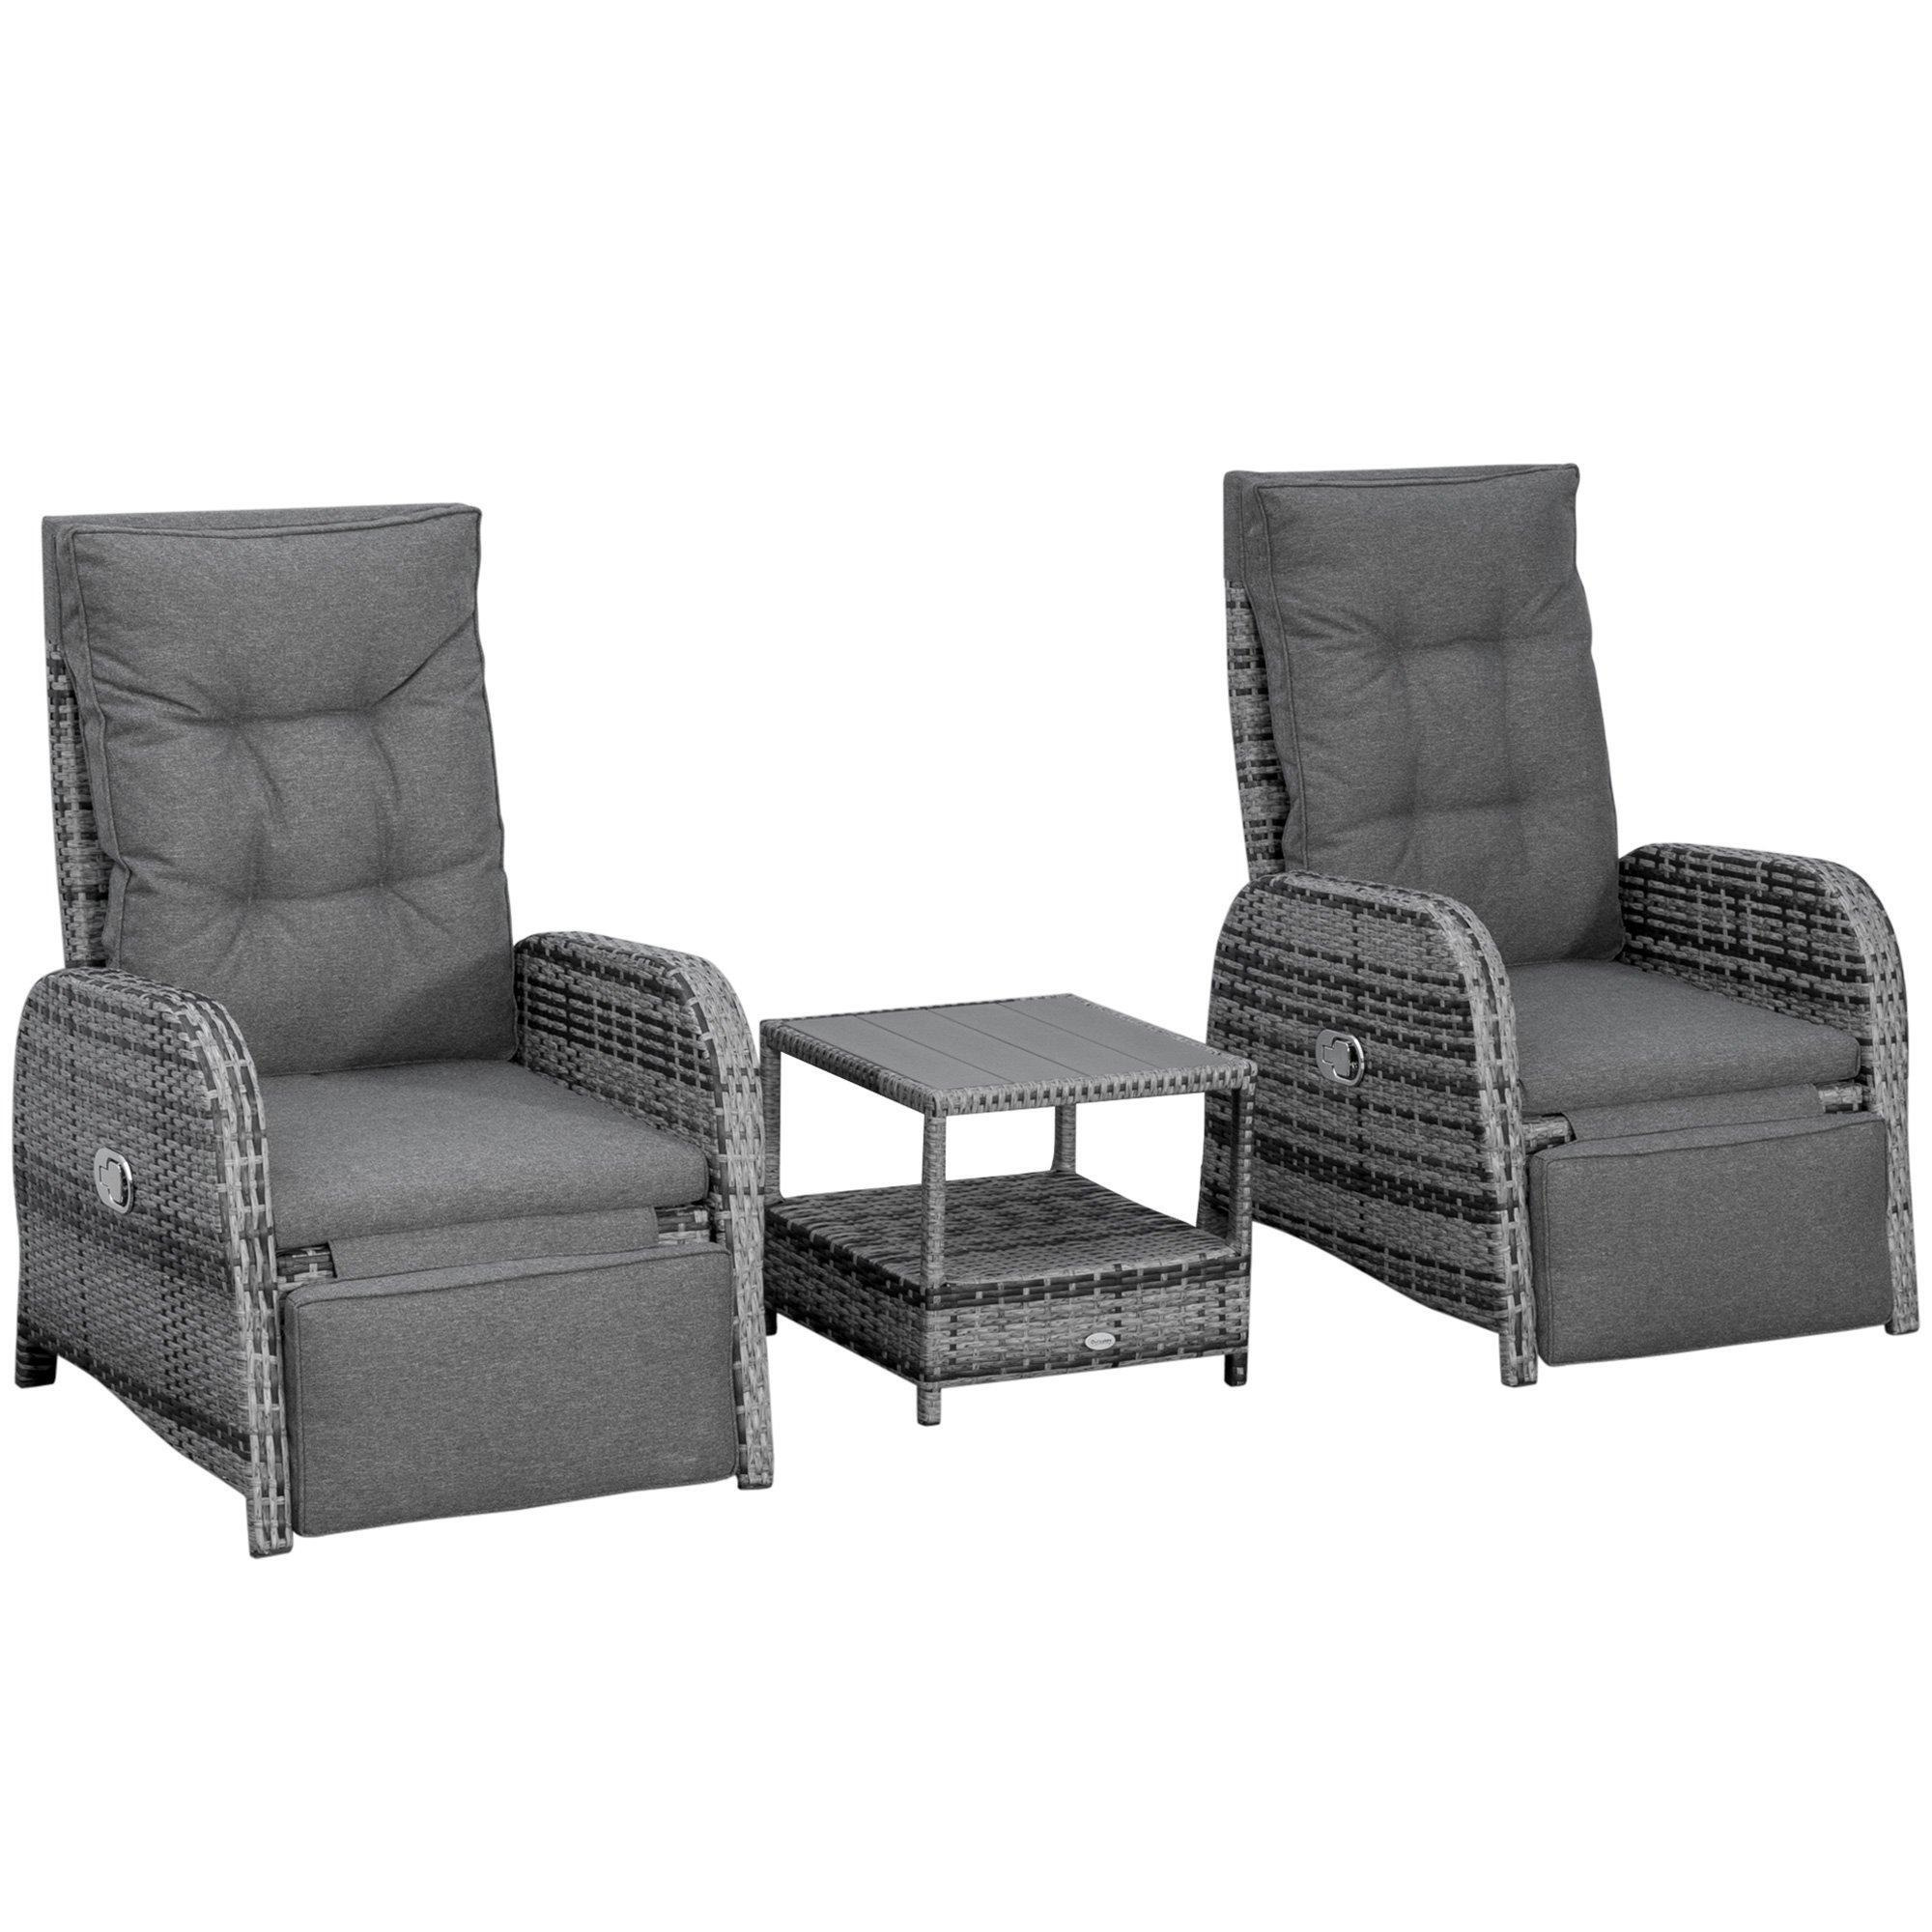 3 PCs Patio Rattan Wicker Chaise Lounge Sofa Set w/ Cushion for Patio Yard Porch - image 1